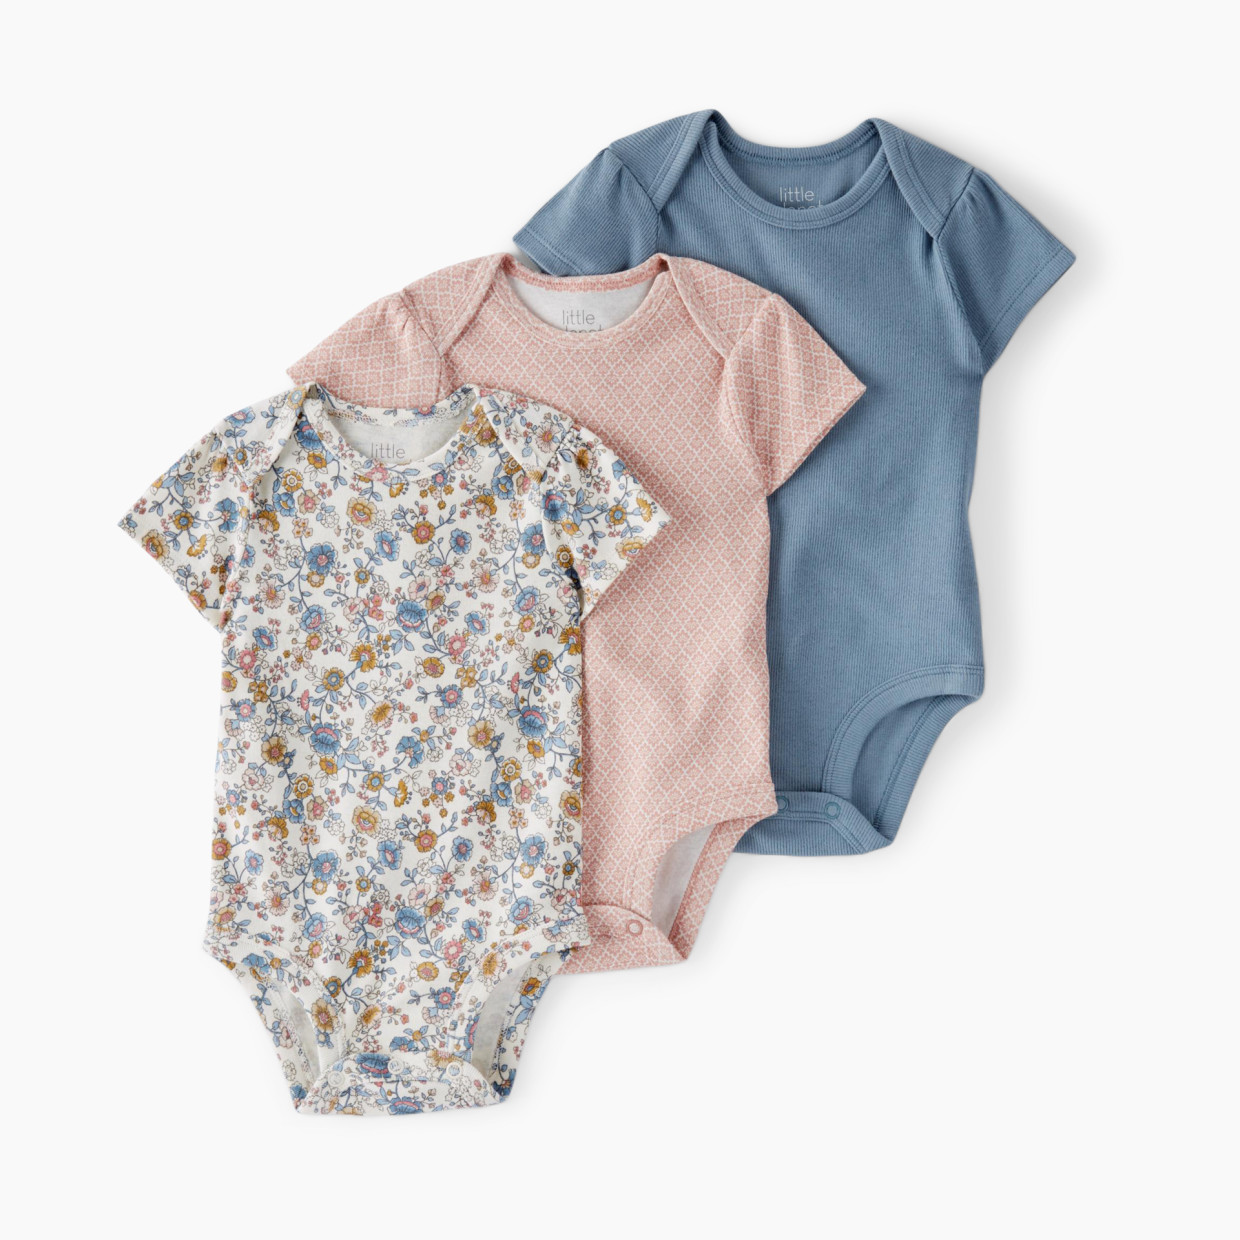 Carter's Little Planet Organic Cotton Rib Bodysuits (3 Pack) - Multi-Color Flower, 3 M.